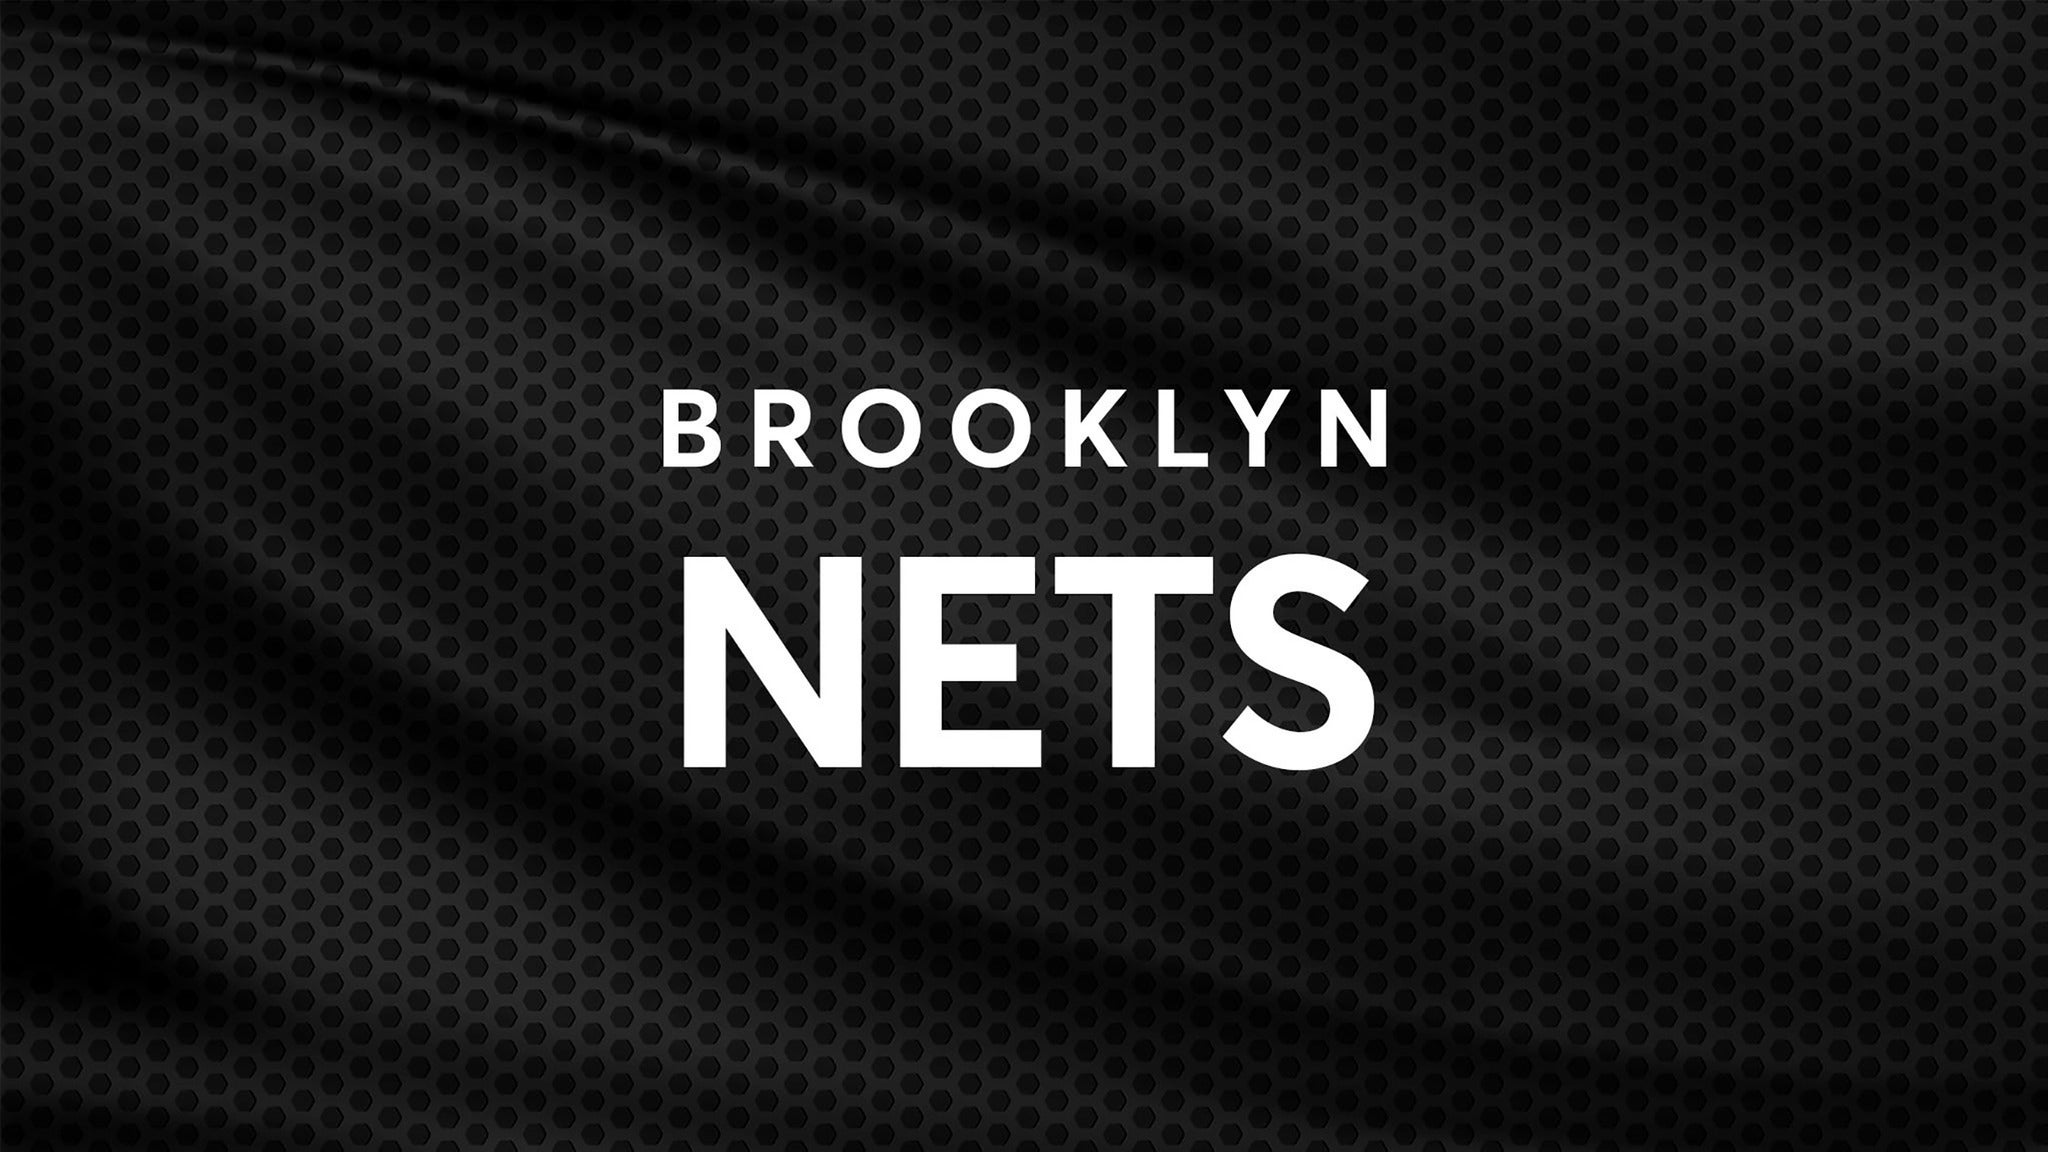 Brooklyn Nets vs. LA Clippers